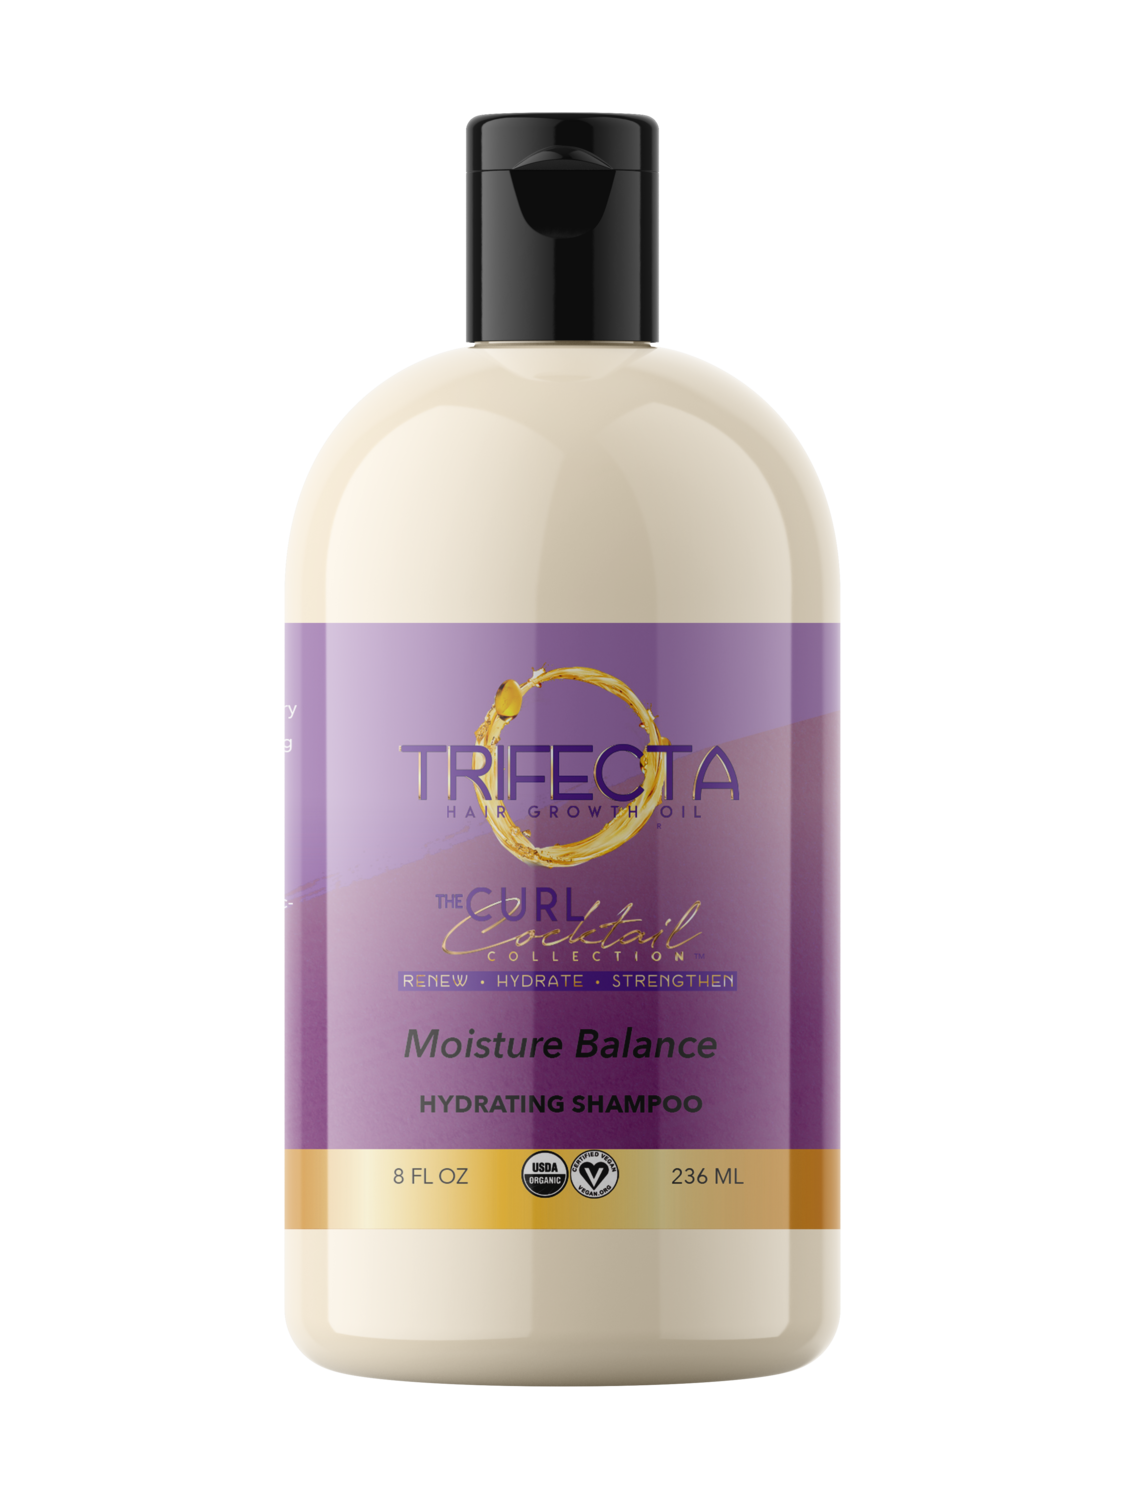 Moisture Balance Hydrating Shampoo